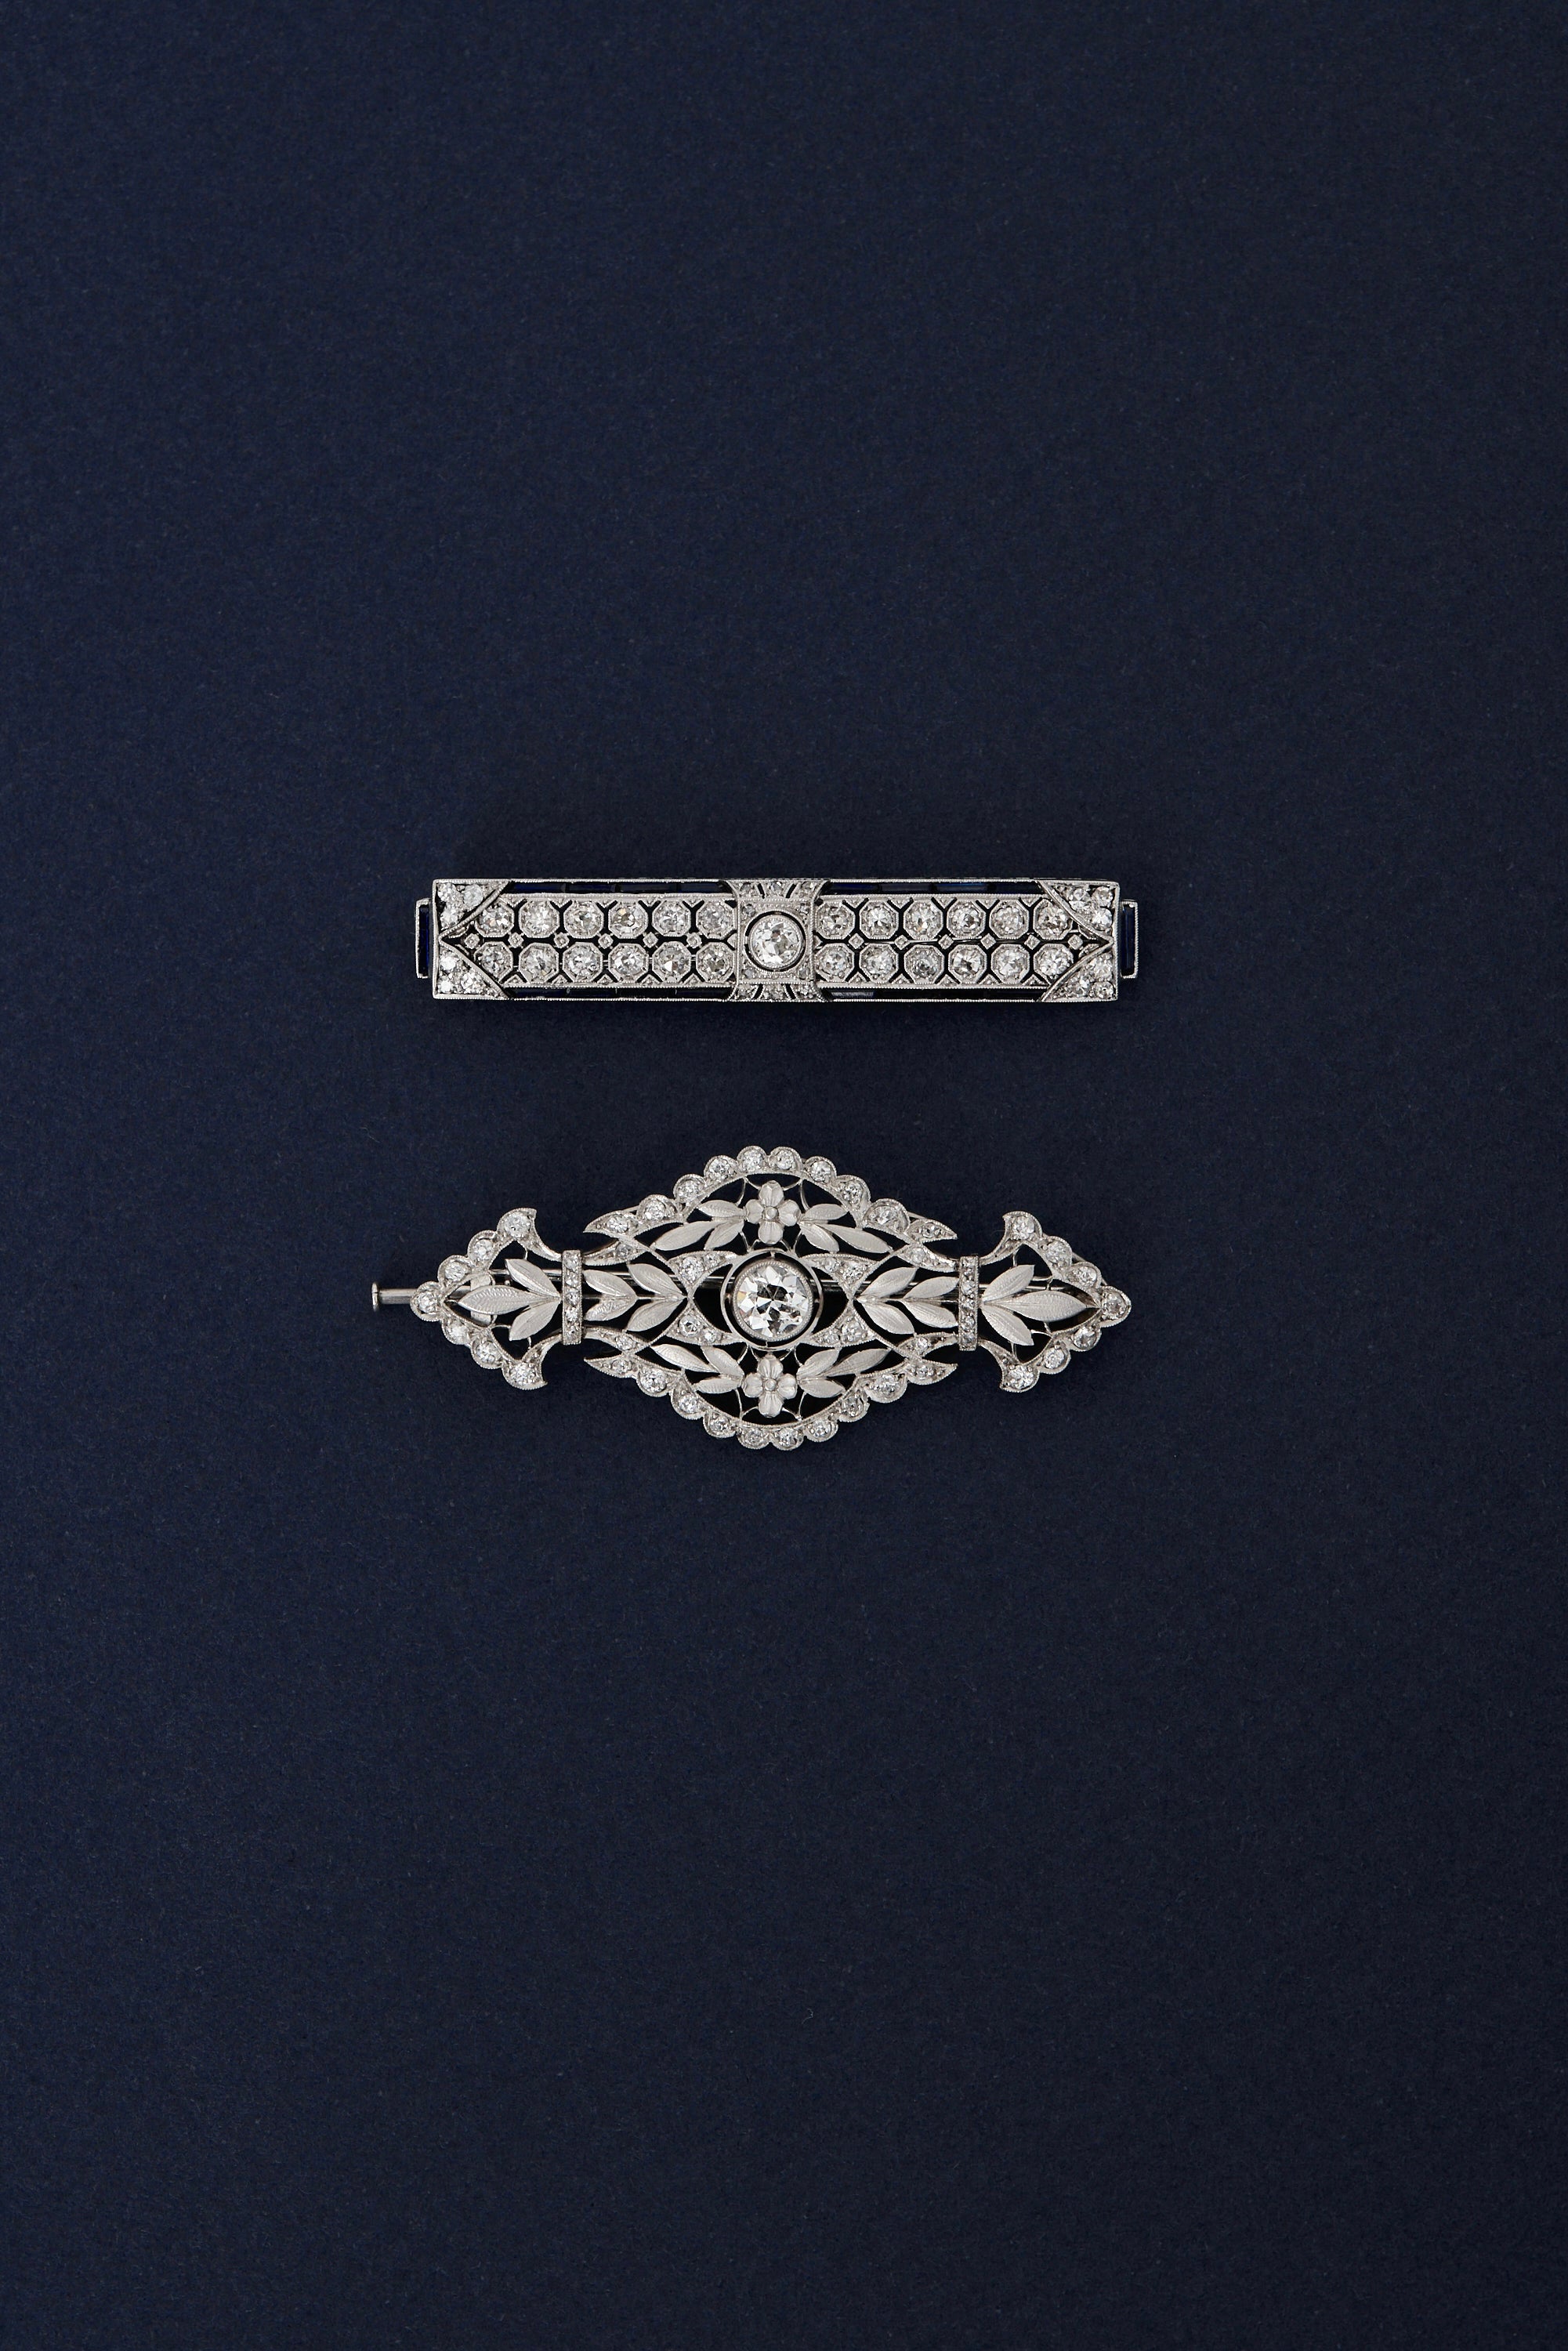 Art Deco Sapphire Brooch